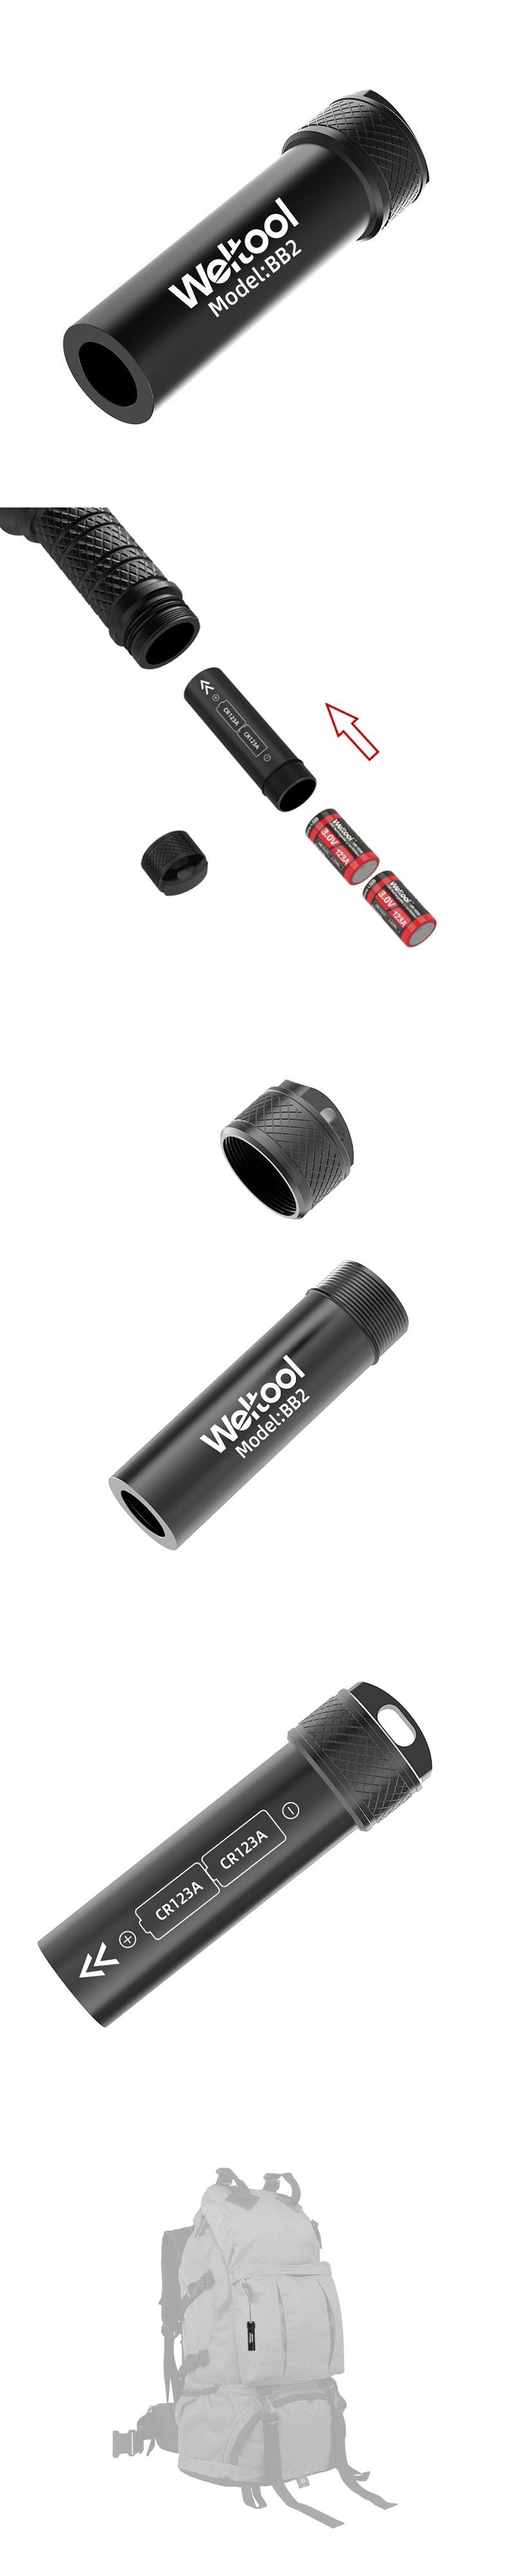 Weltool-2xCR123A-Battery-Holder-Battery-Adapter-Case-Box-18650-Battery-Converter-Case-Flashlight-Acc-1612117